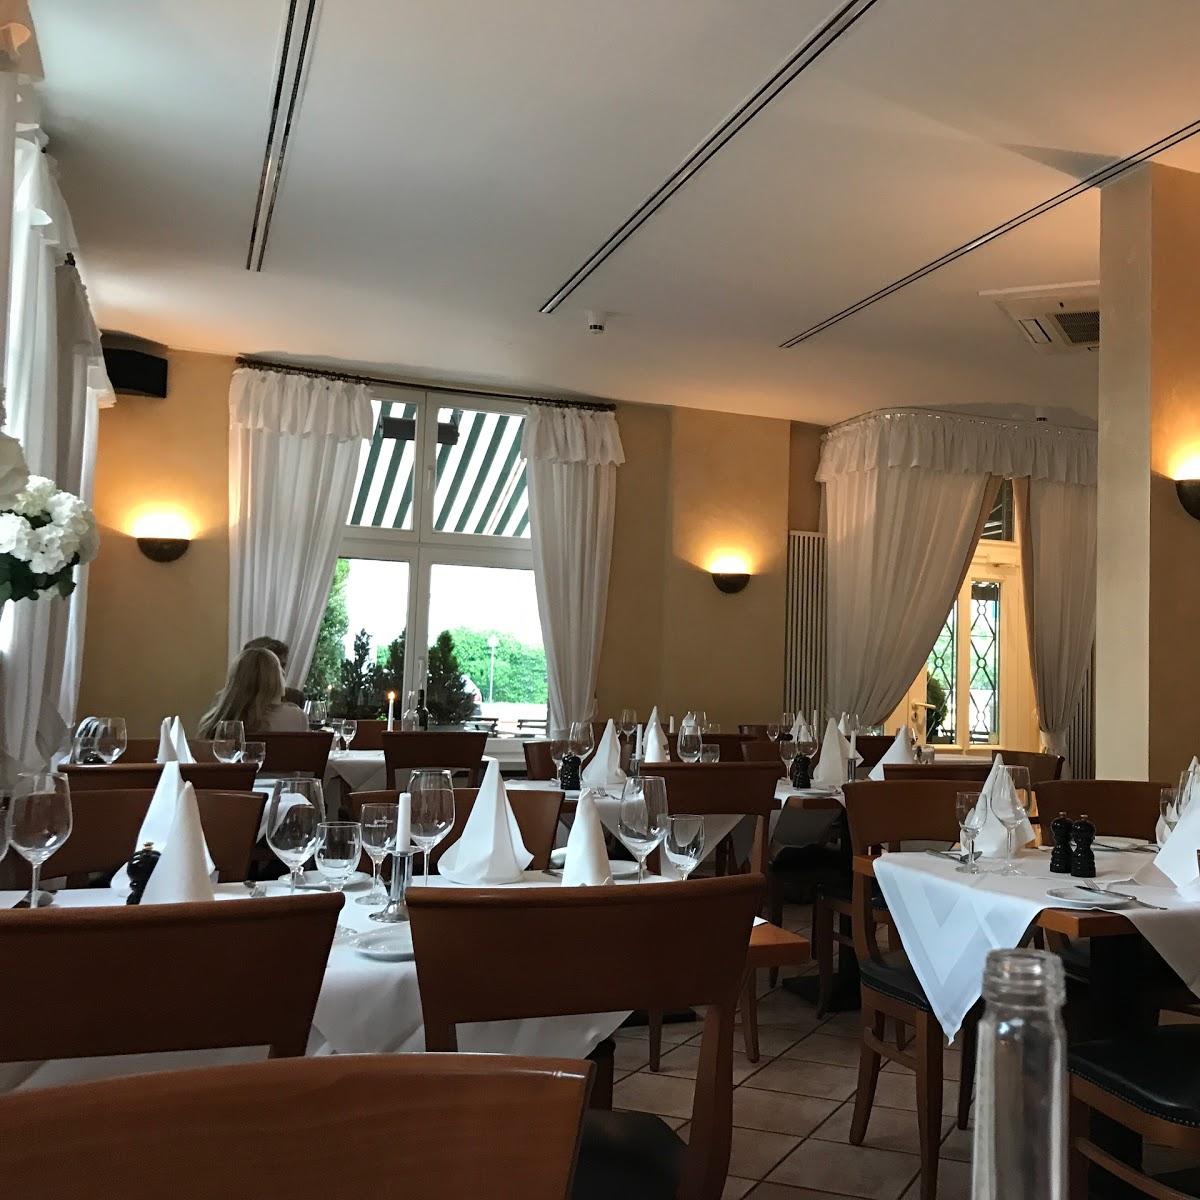 Restaurant "Casa Mattoni" in Düsseldorf